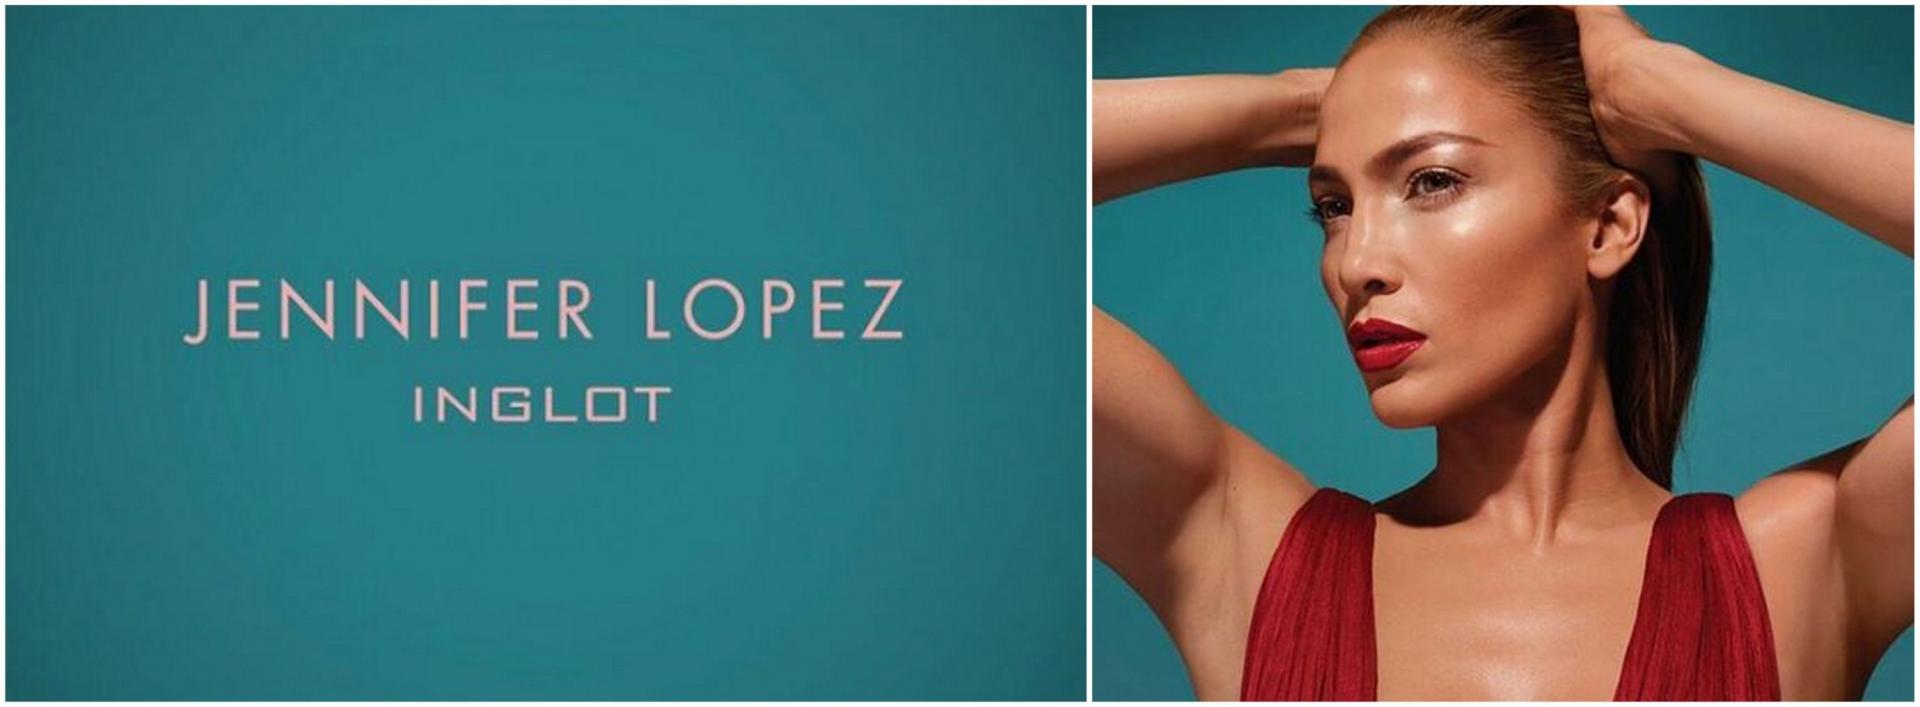 Inglot podpisał kontrakt reklamowy z Jennifer Lopez